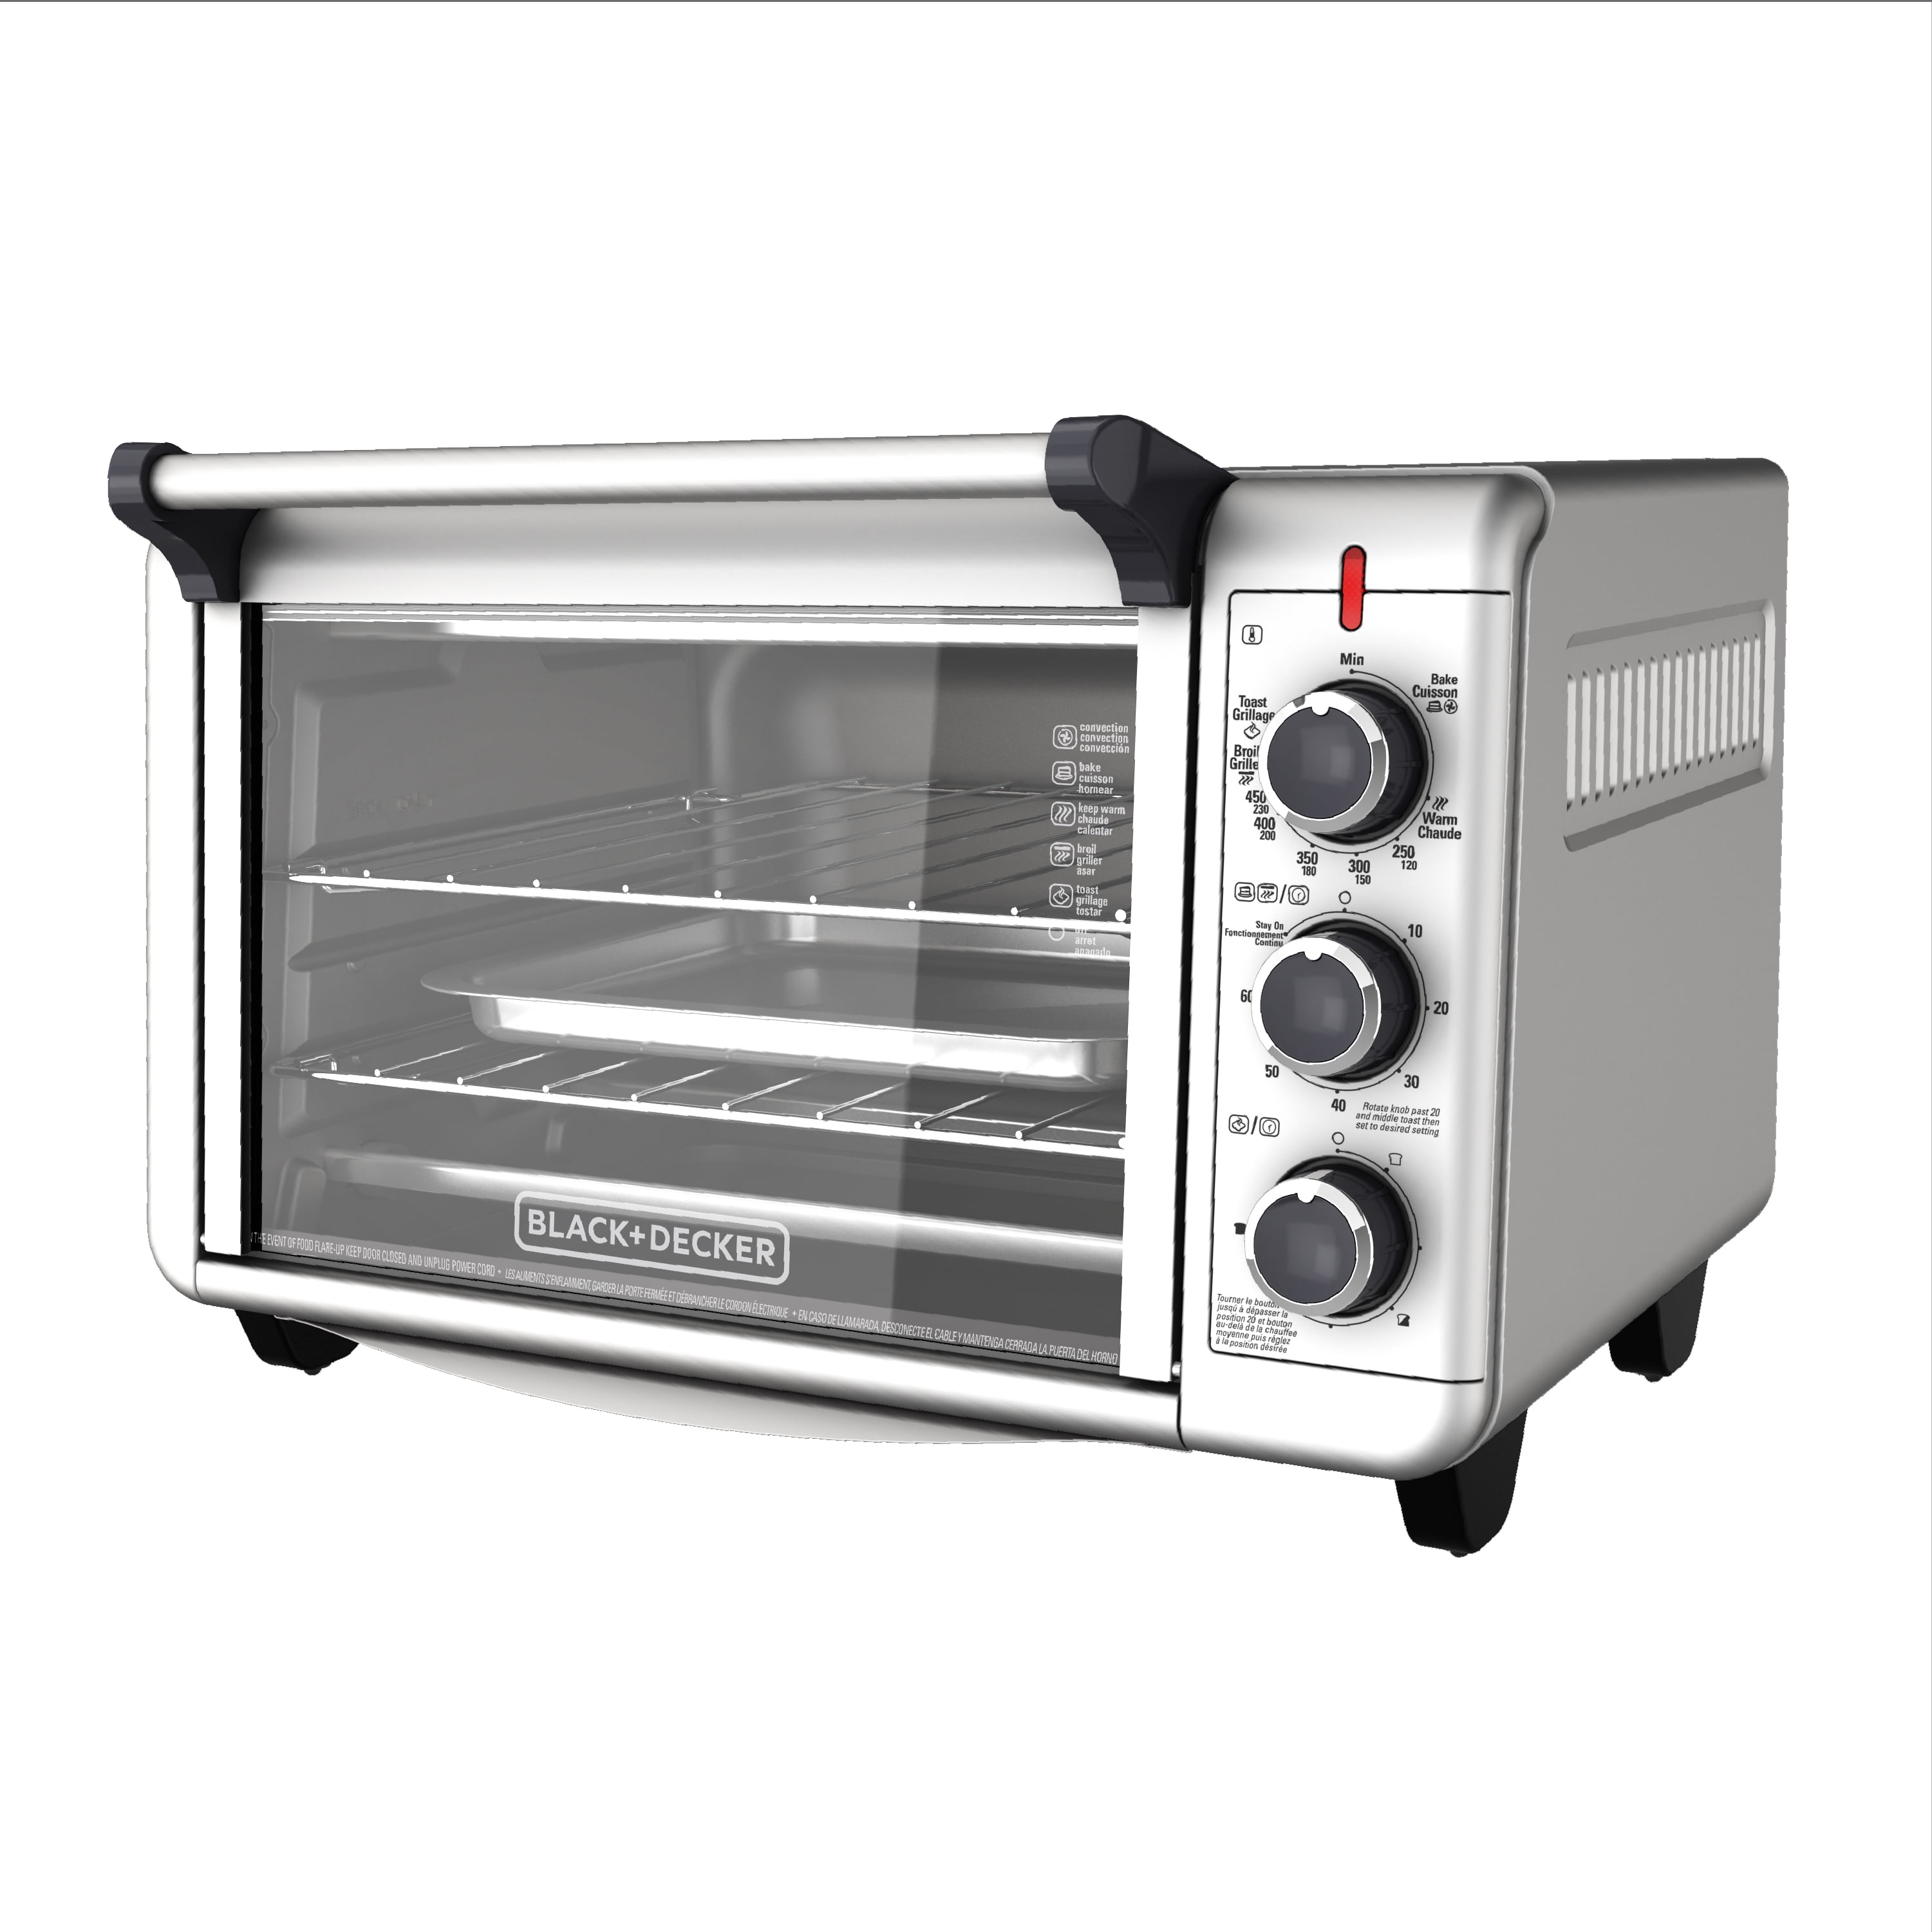 Black & Decker CTO500 Toaster Oven 220 240 Volt